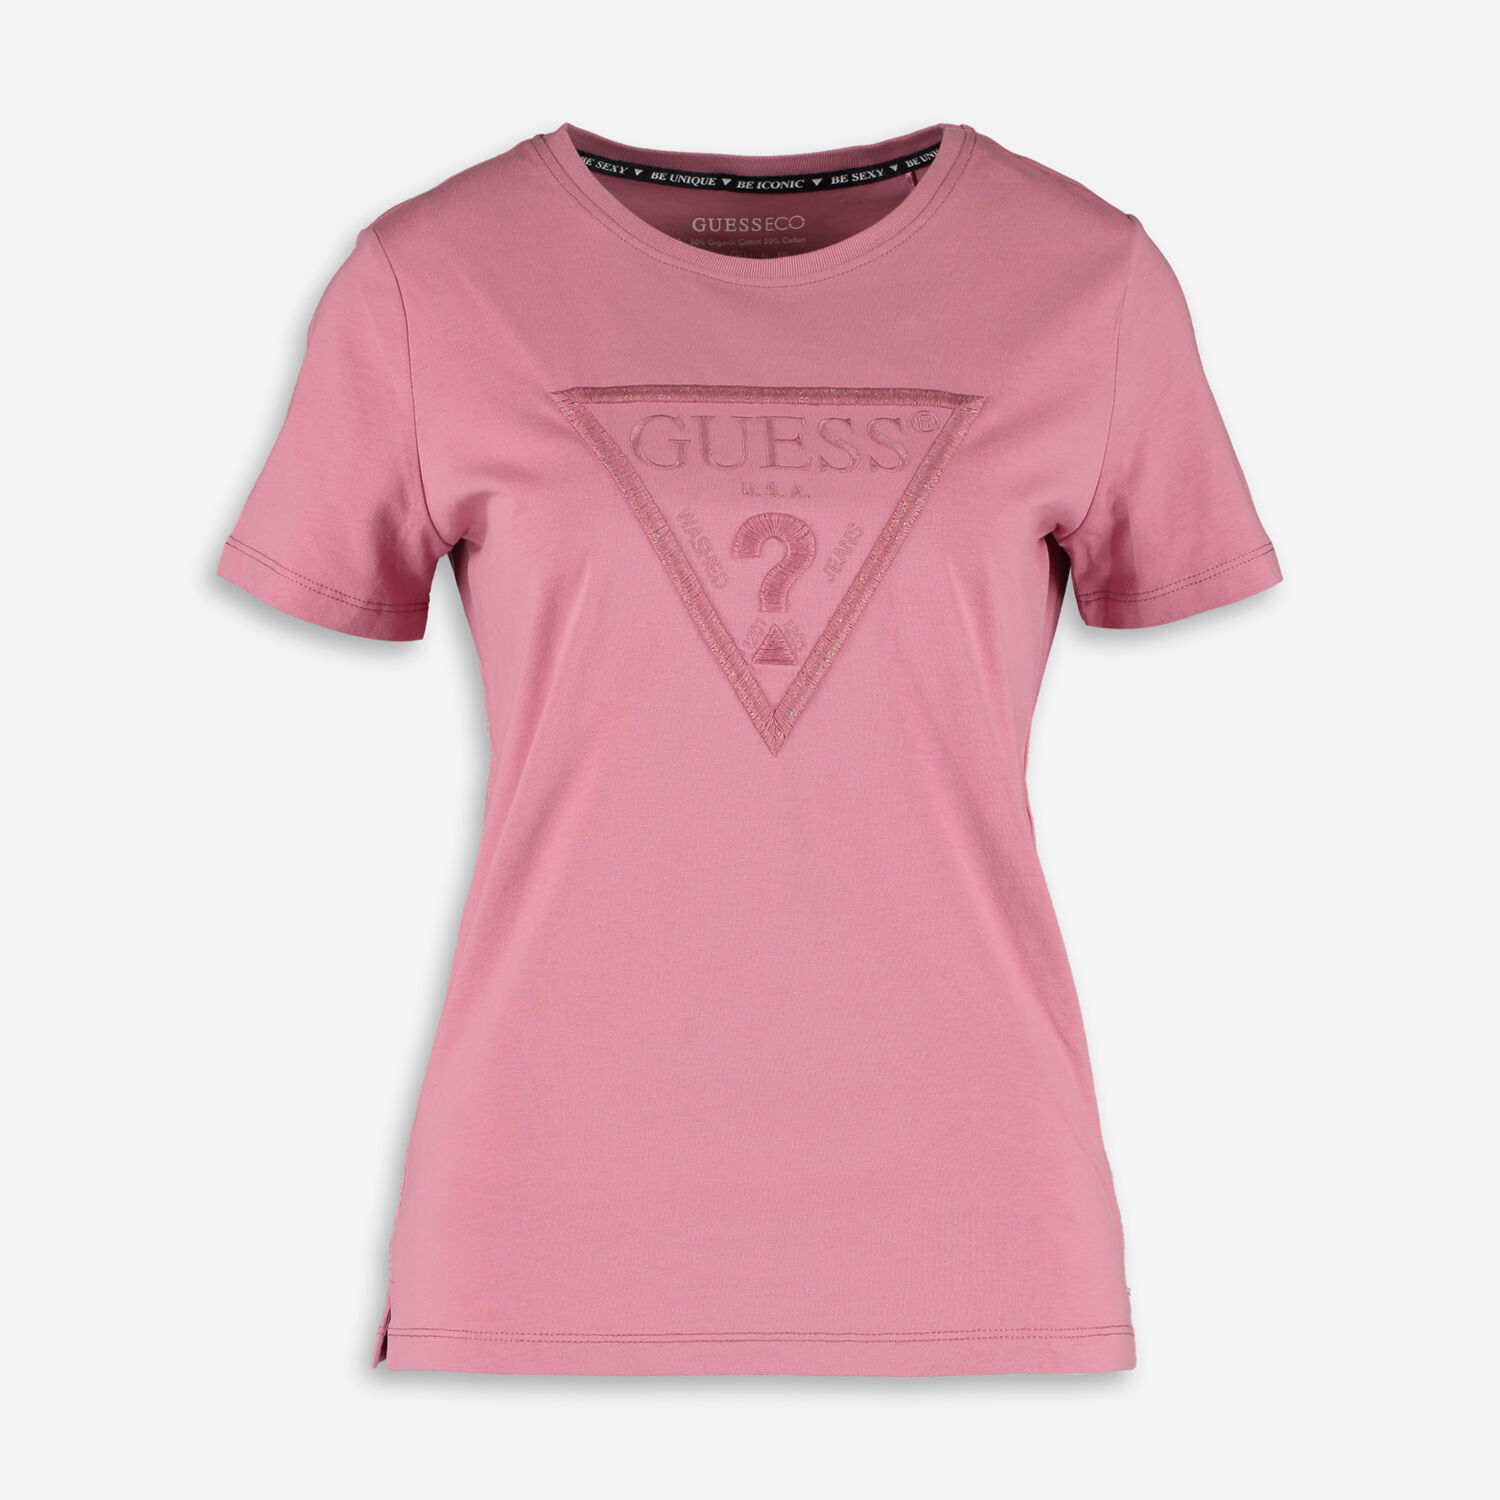 pink 32d tshirt - Gem